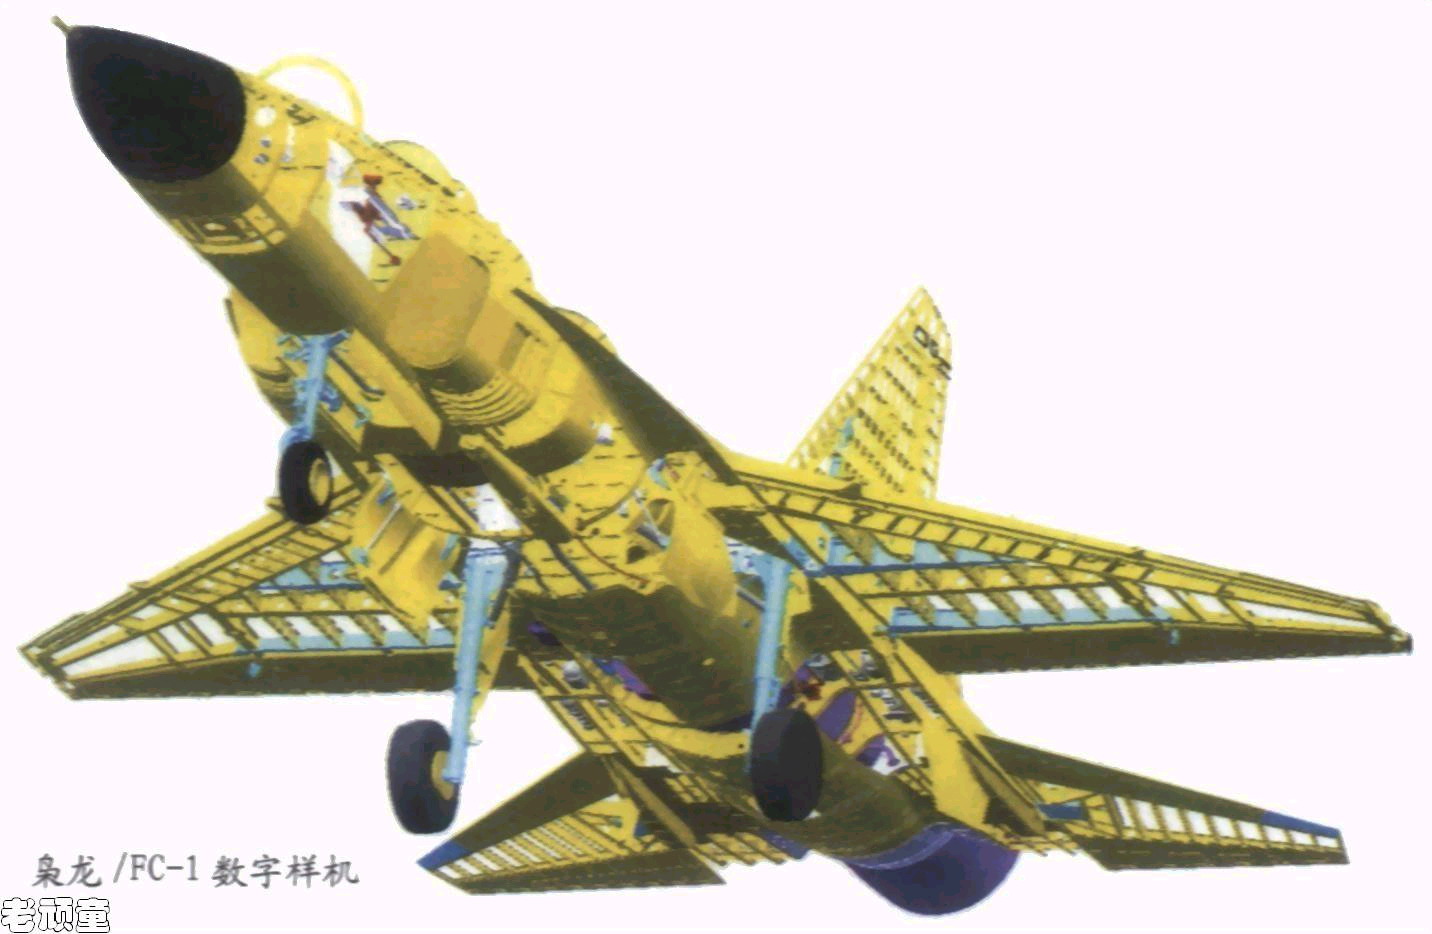 jf-17-fc-1-cutaway-bottom-angle.jpg